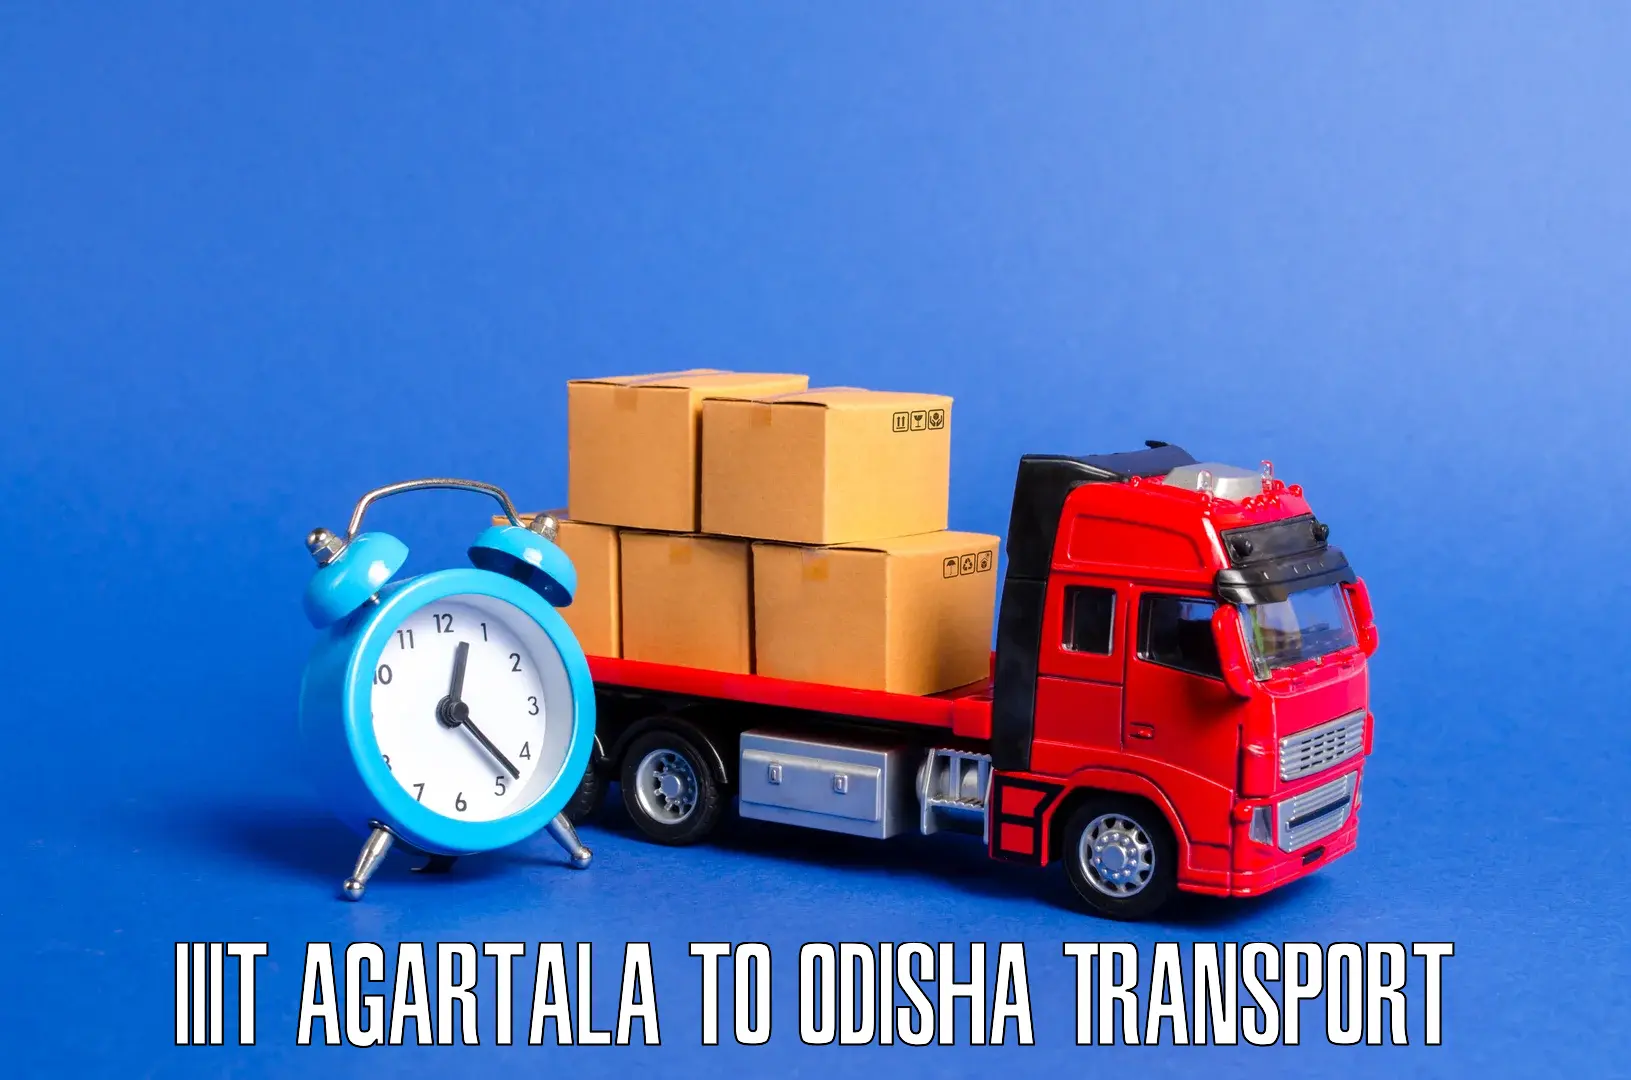 Cycle transportation service IIIT Agartala to Kodala